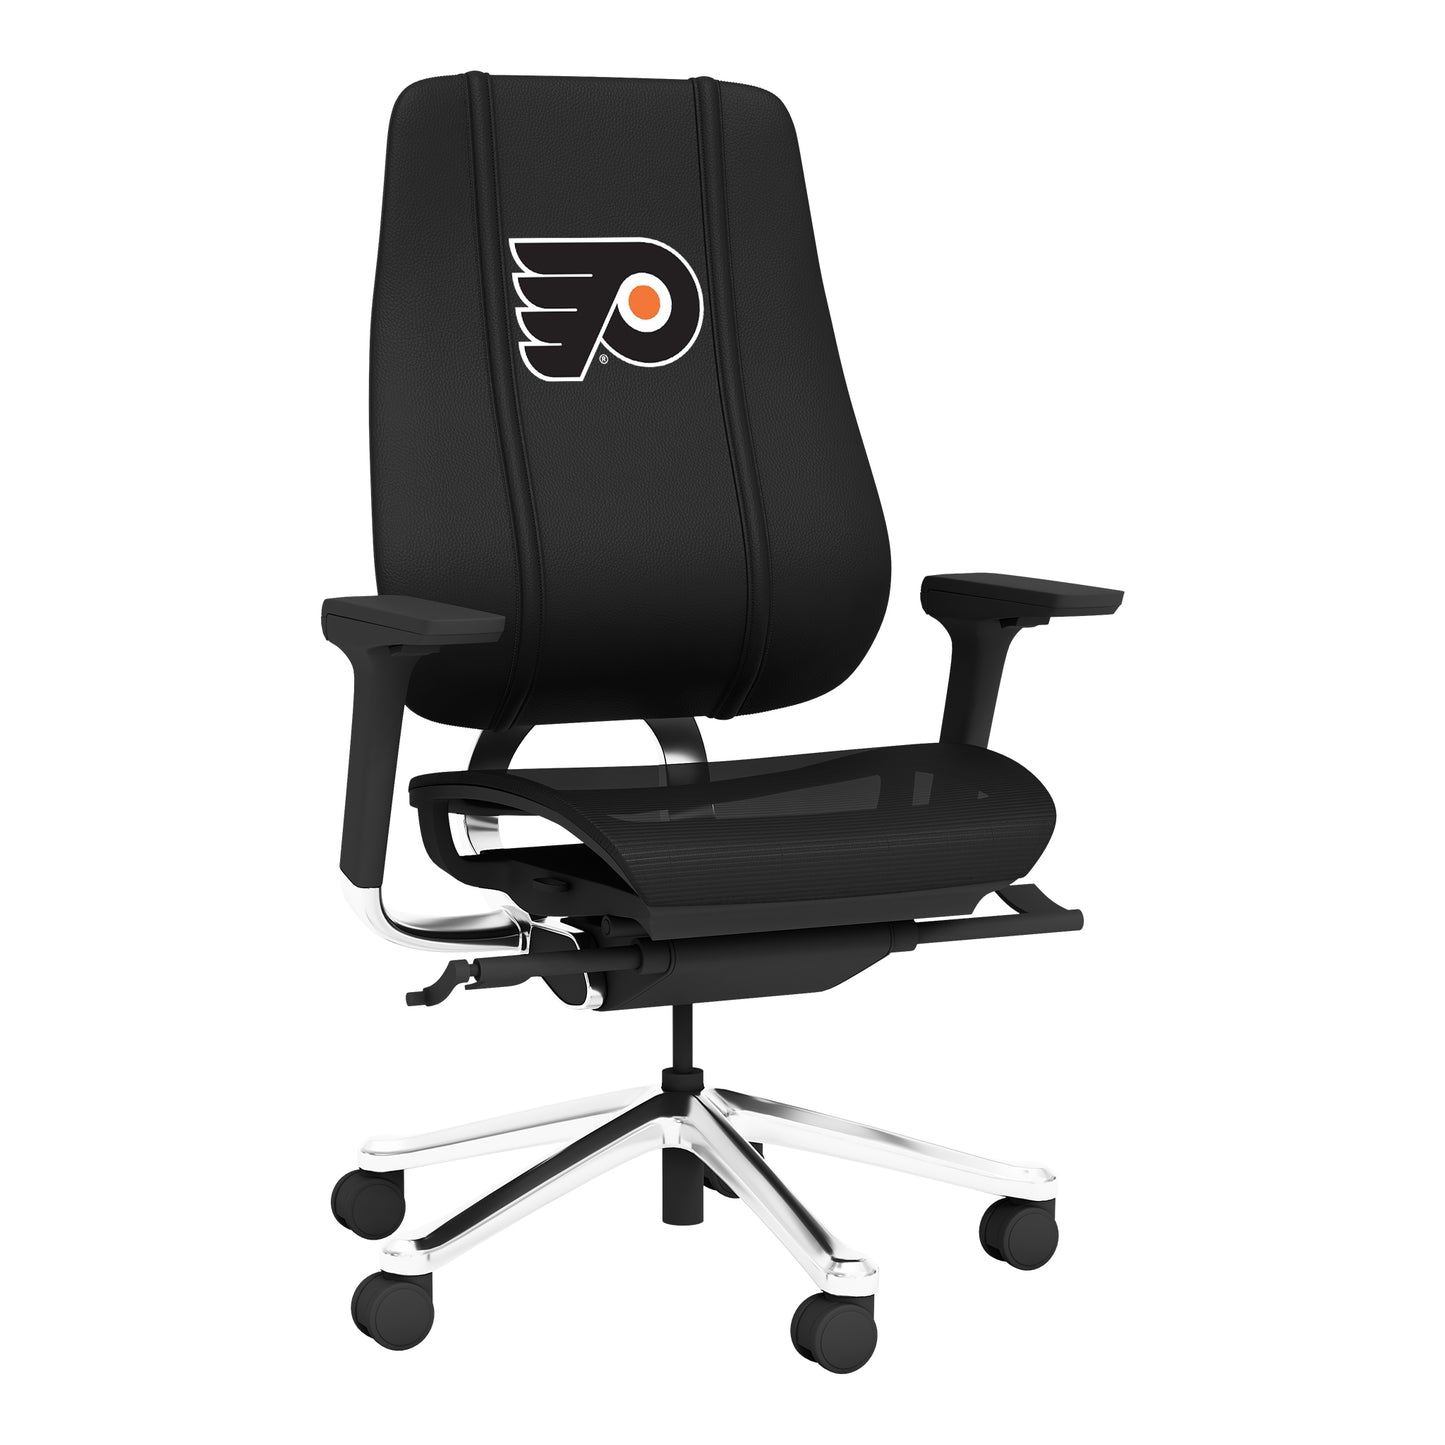 PhantomX Mesh Gaming Chair with Philadelphia Flyers Logo